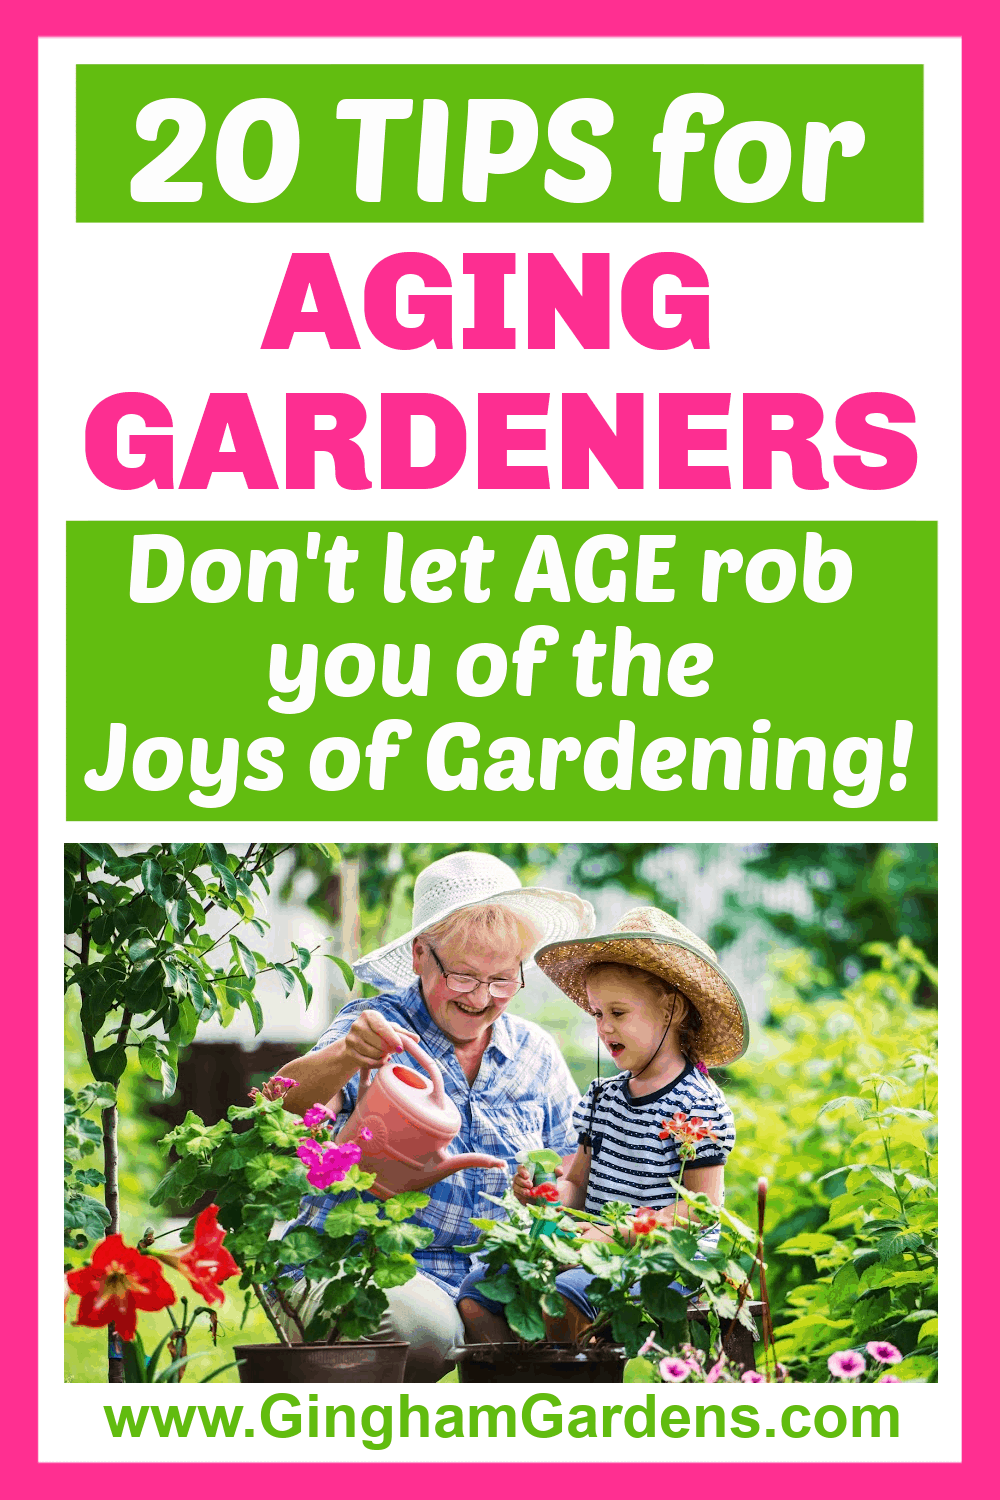 Image of an elderly gardener with text overlay - 20 tips for aging gardeners